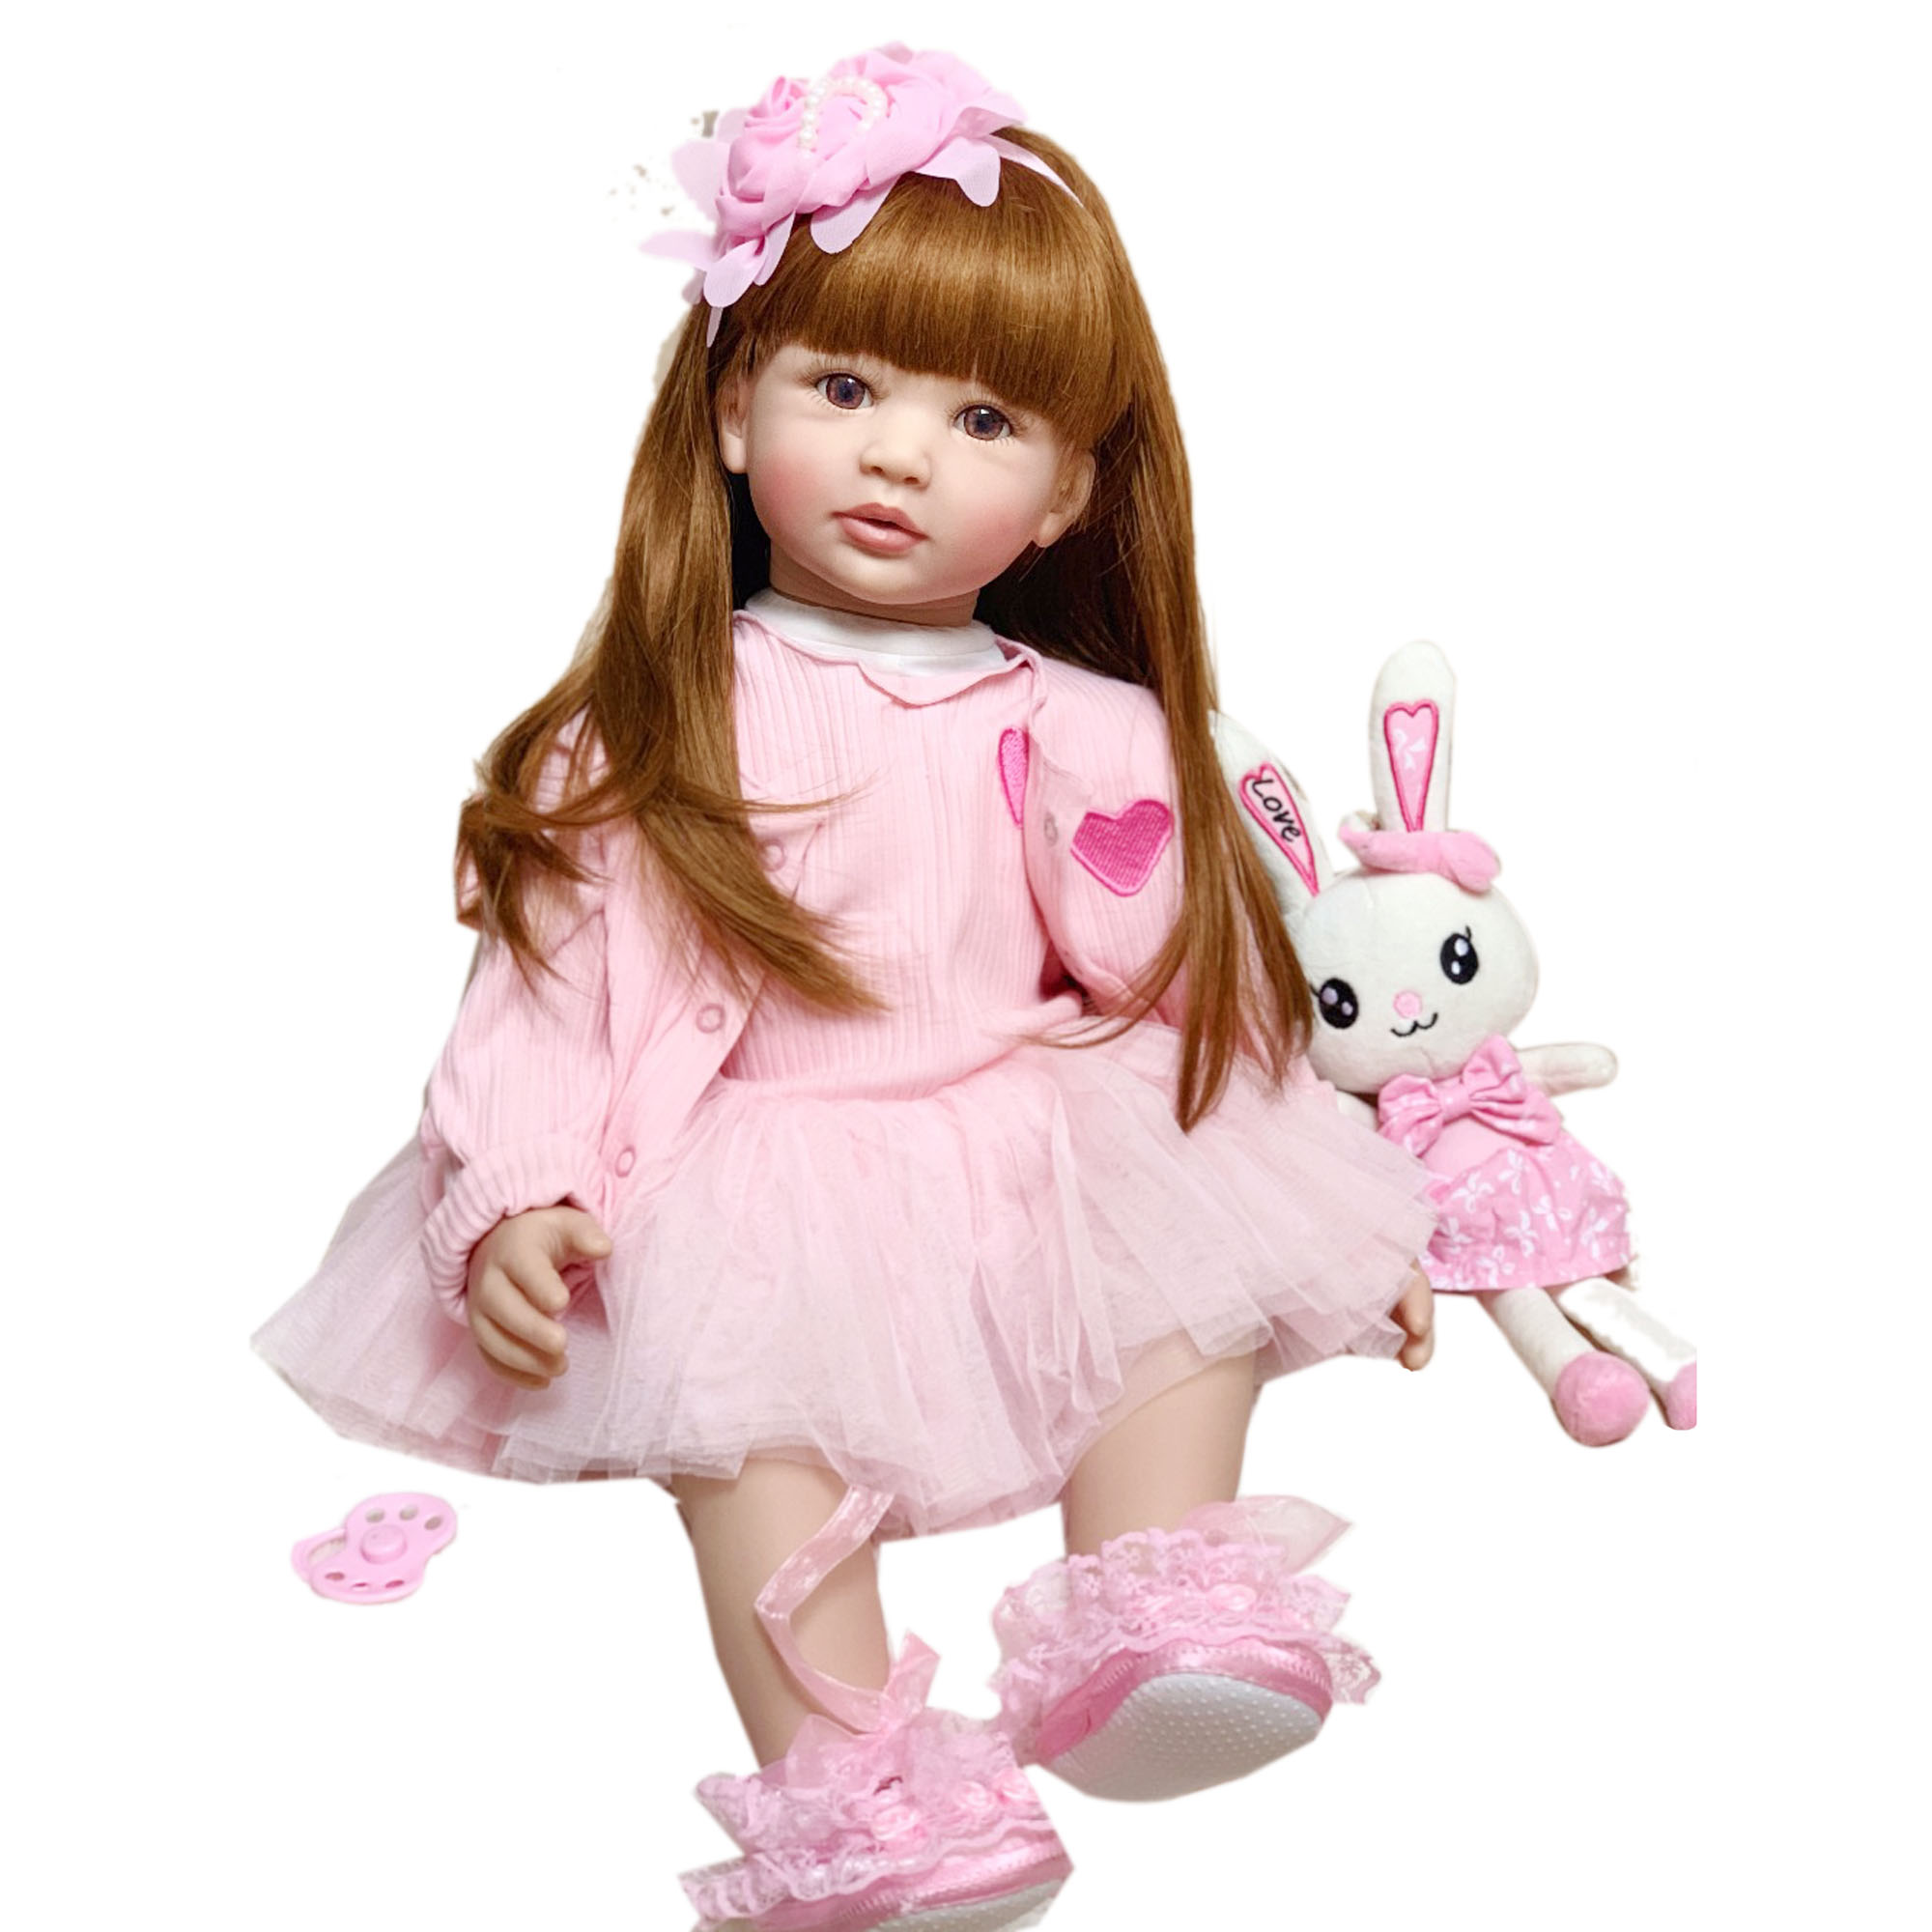 60cm Silicone Reborn Baby Doll Lifelike Vinyl Princess Toddler Toy Alive Bebe Newborn Fashion Birthday Xmas Gift NPKCOLLECTION 